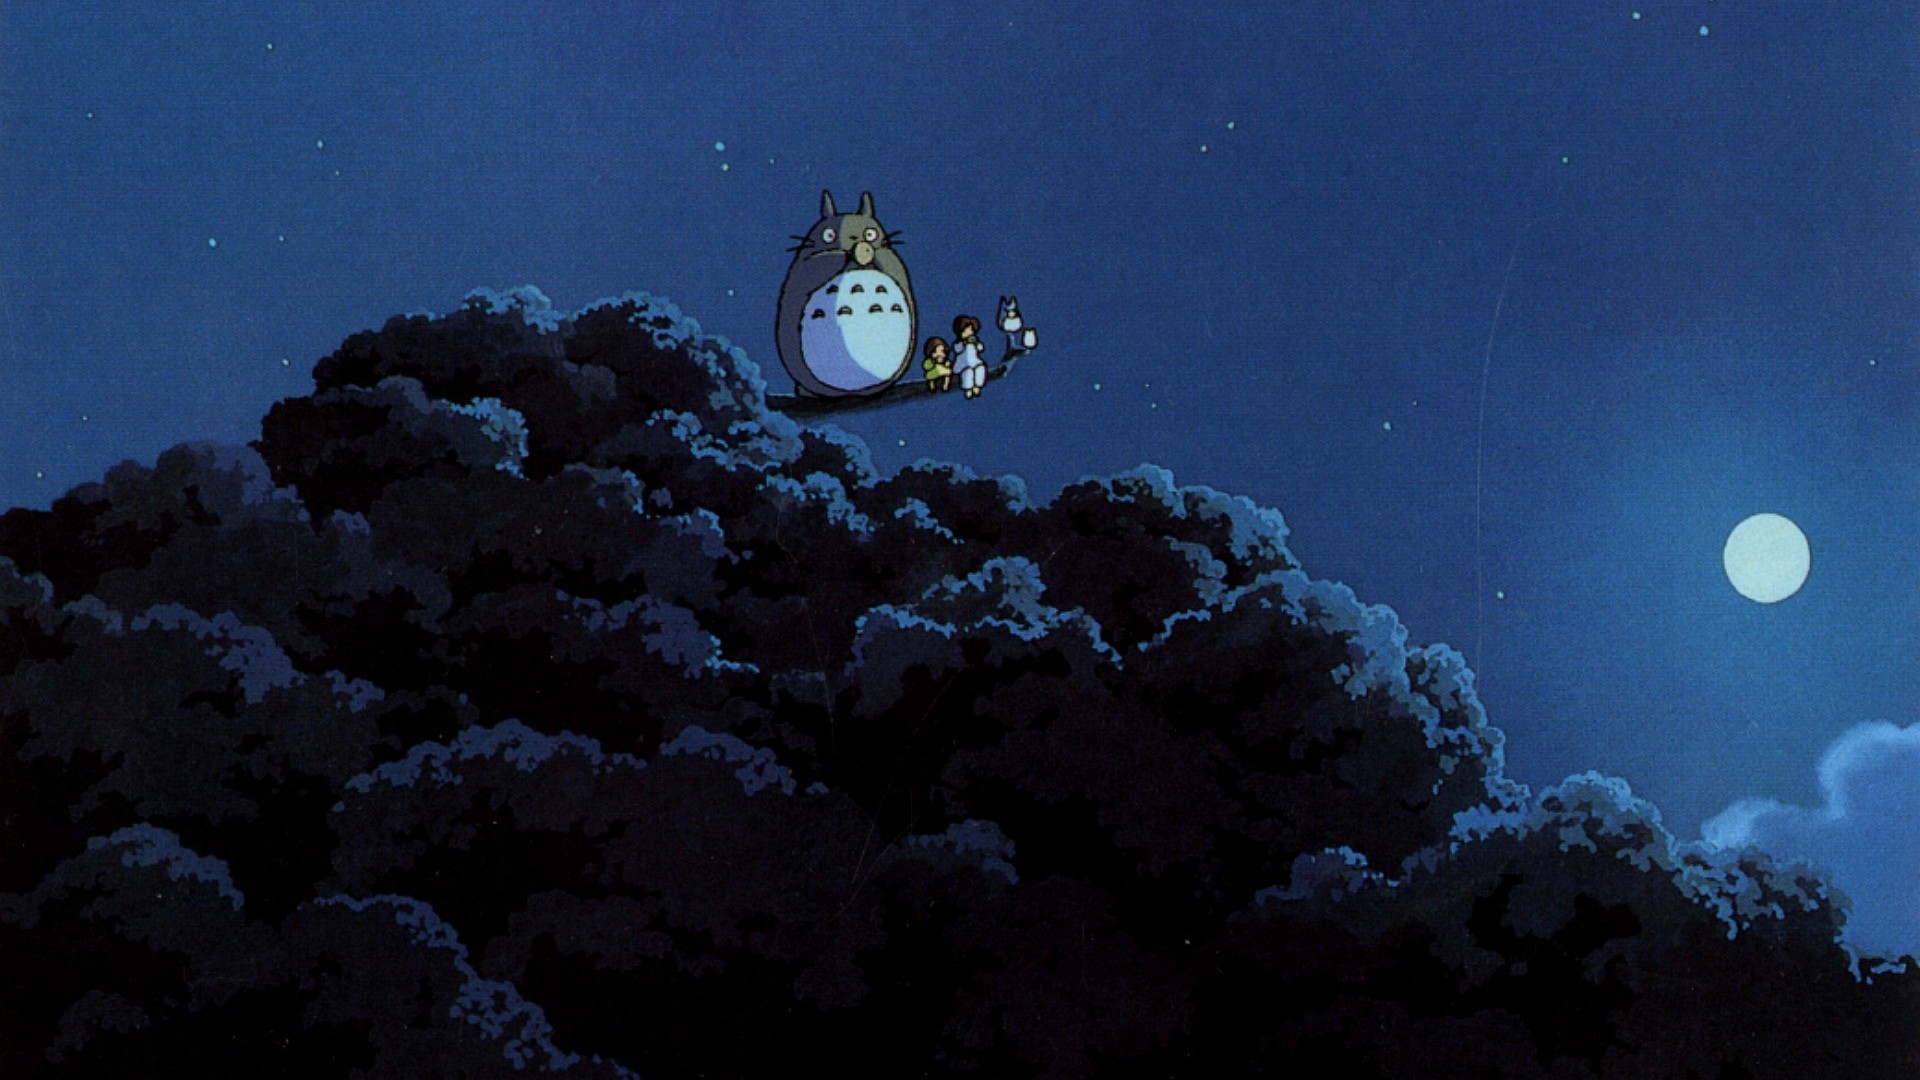 Studio Ghibli Wallpaper 1920x1080 Top HD Images For Free